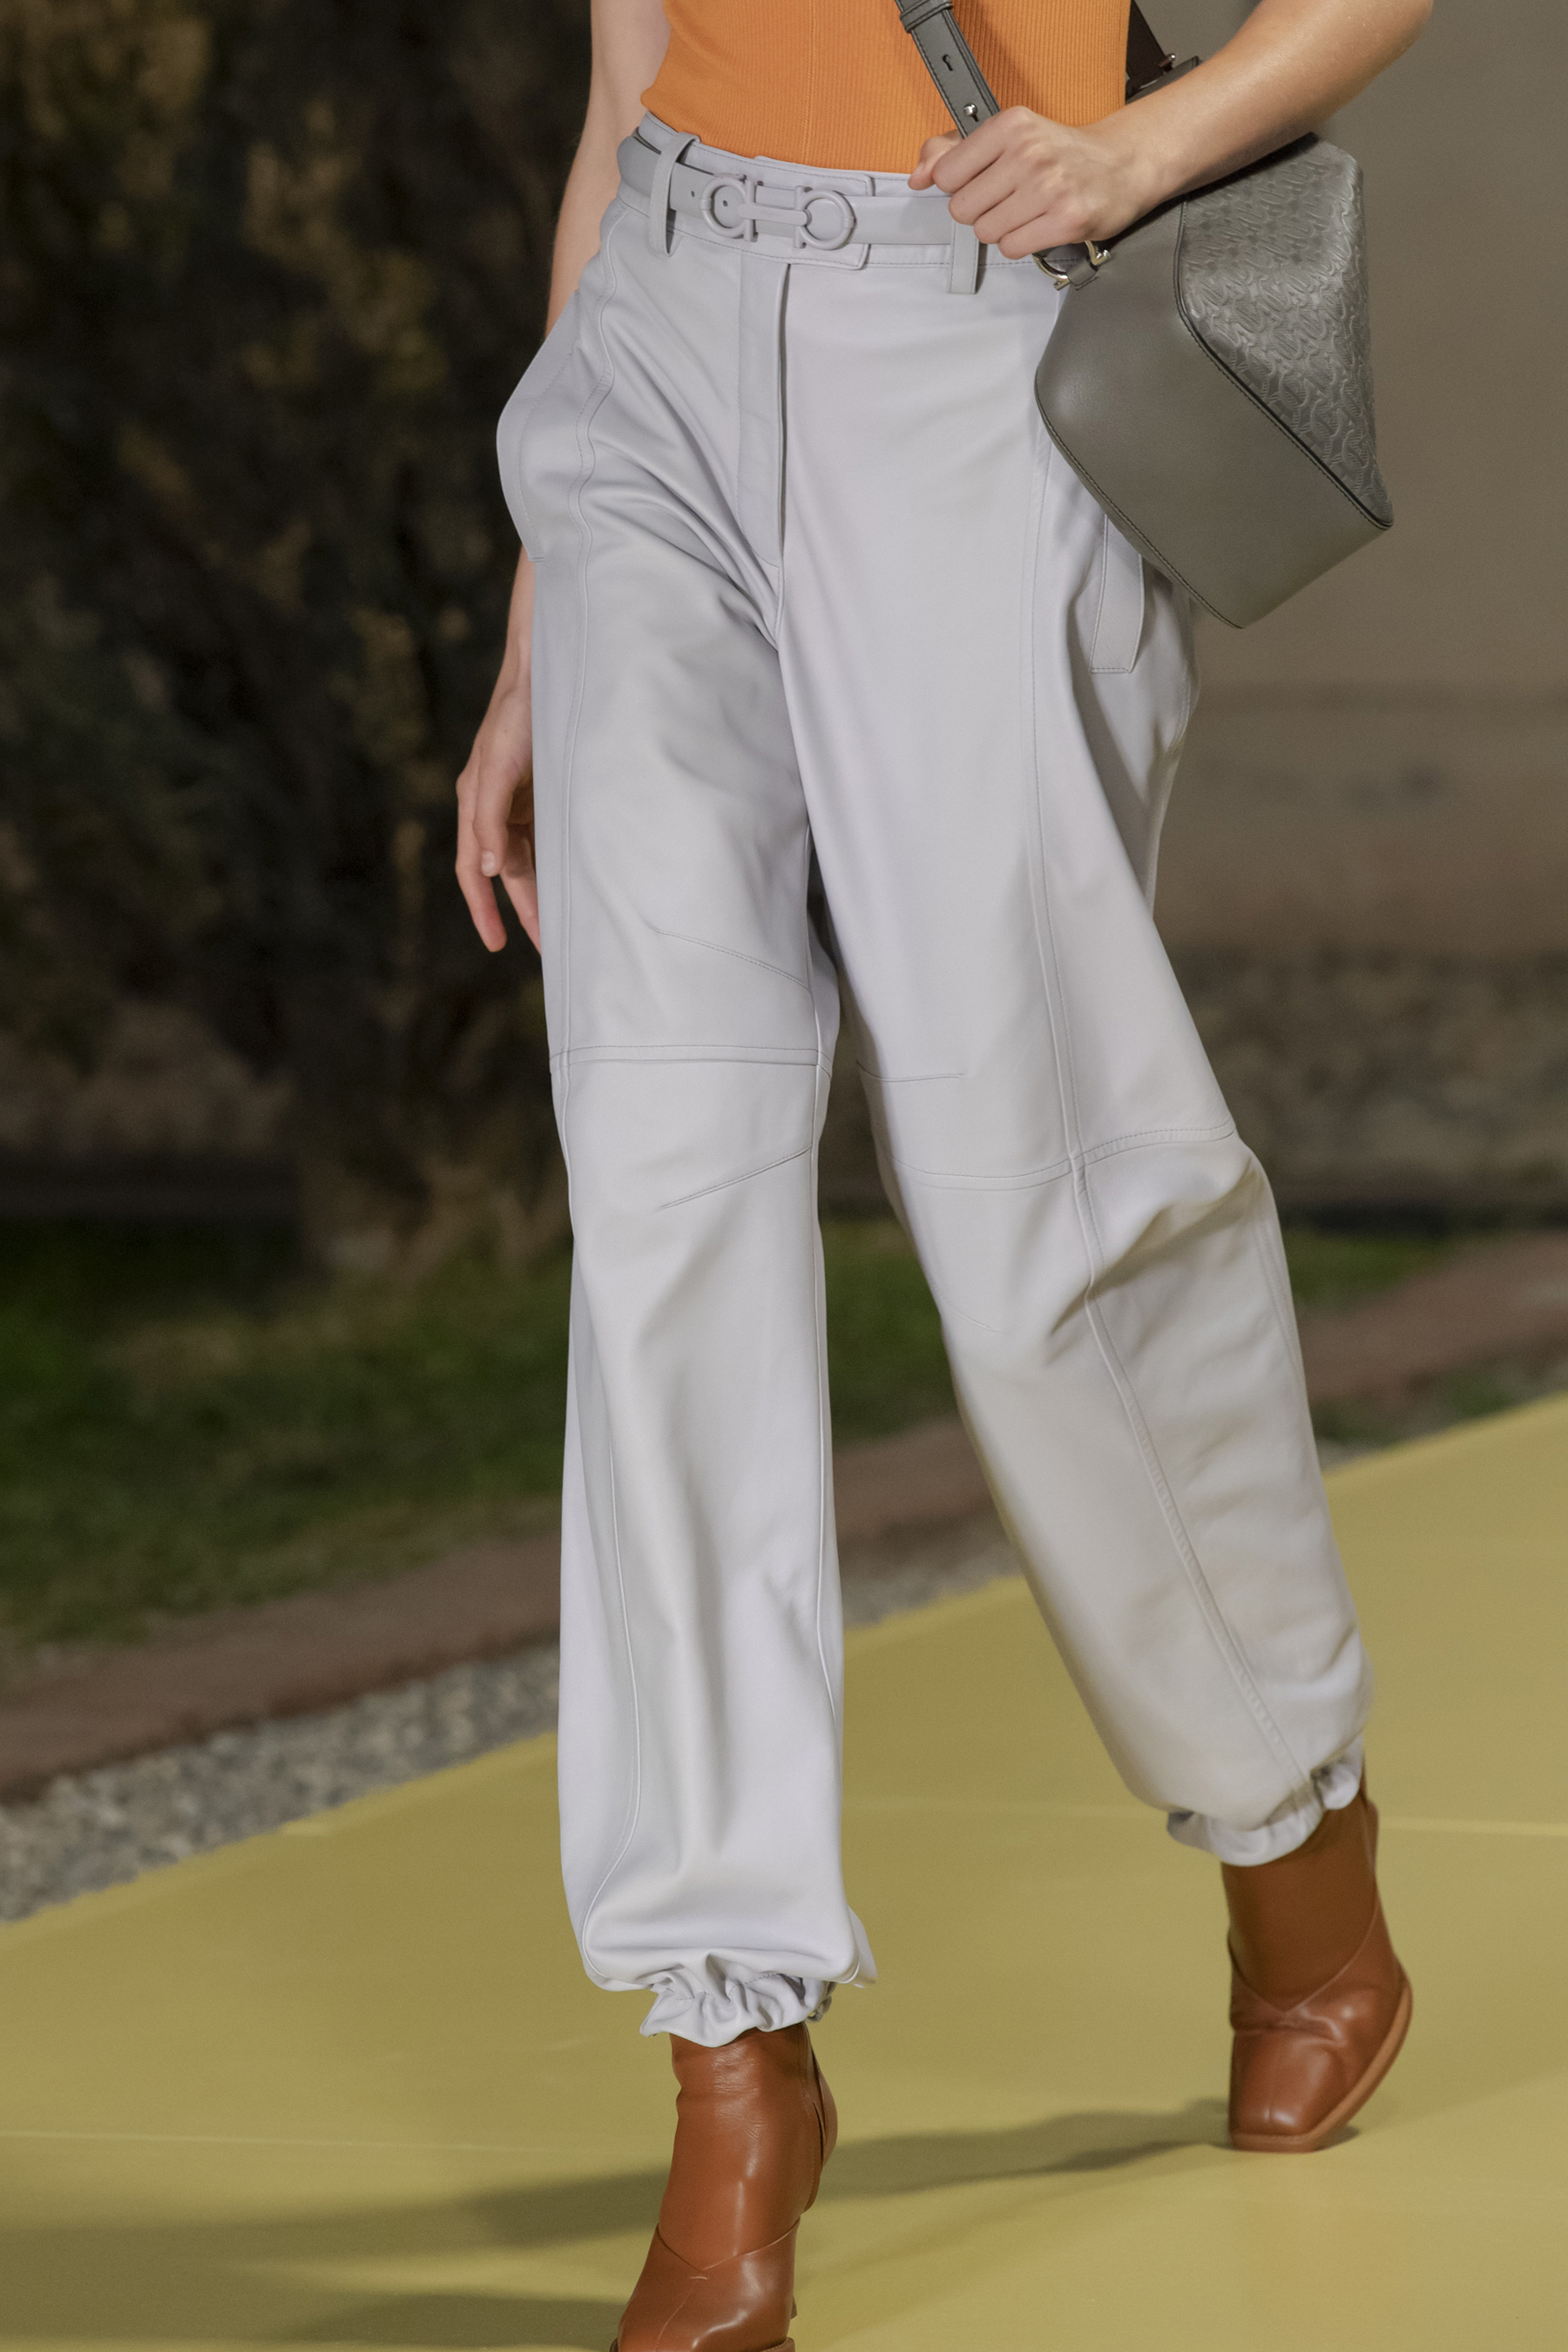 Salvatore Ferragamo Spring 2021 Fashion Show Details